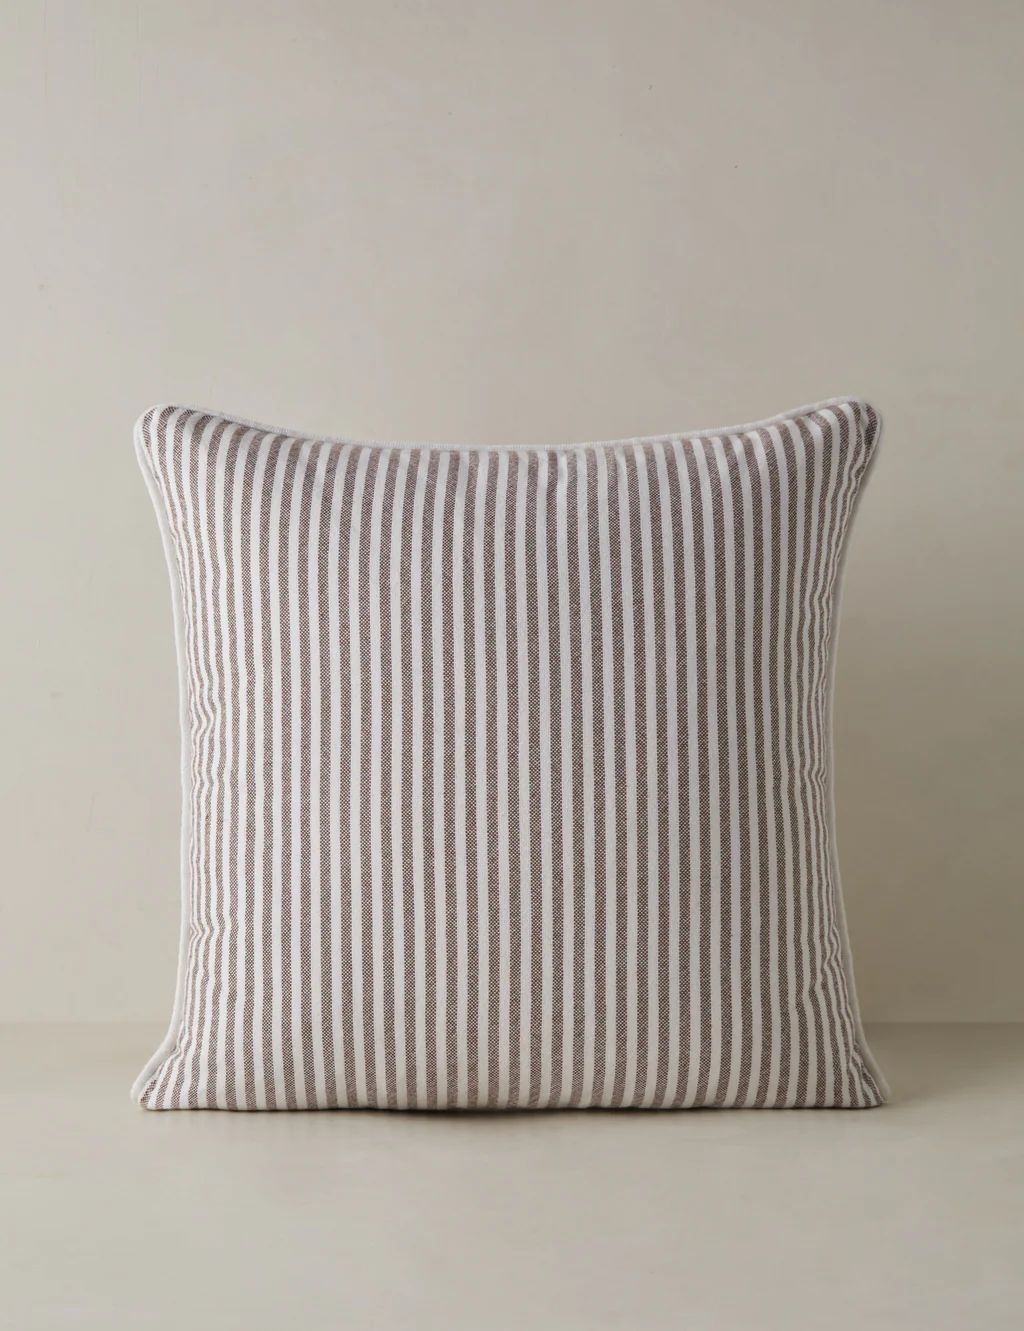 Littu Indoor / Outdoor Striped Pillow by Sarah Sherman Samuel | Lulu and Georgia 